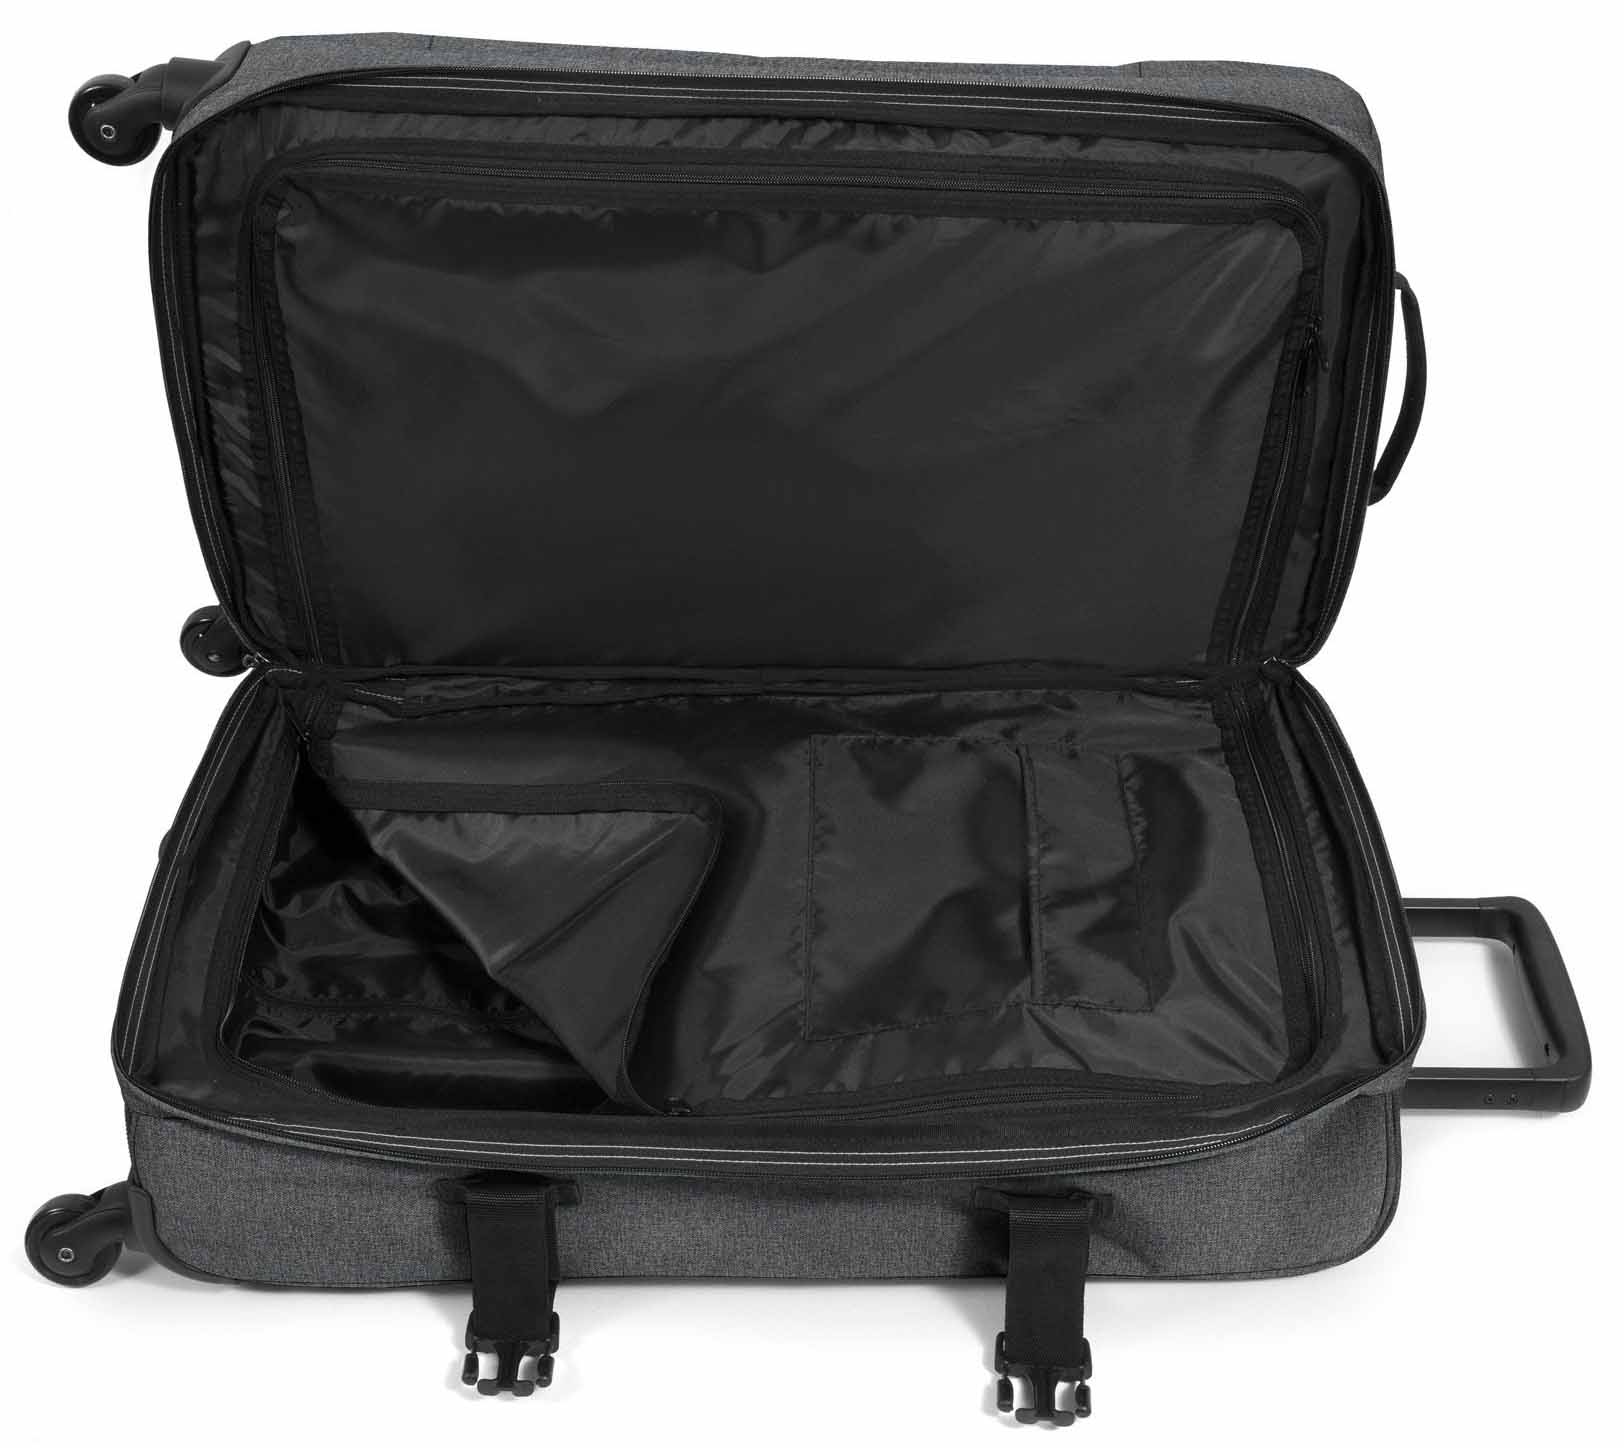 Eastpak Trans4 M 68 Wheeled Bag/Suitcase